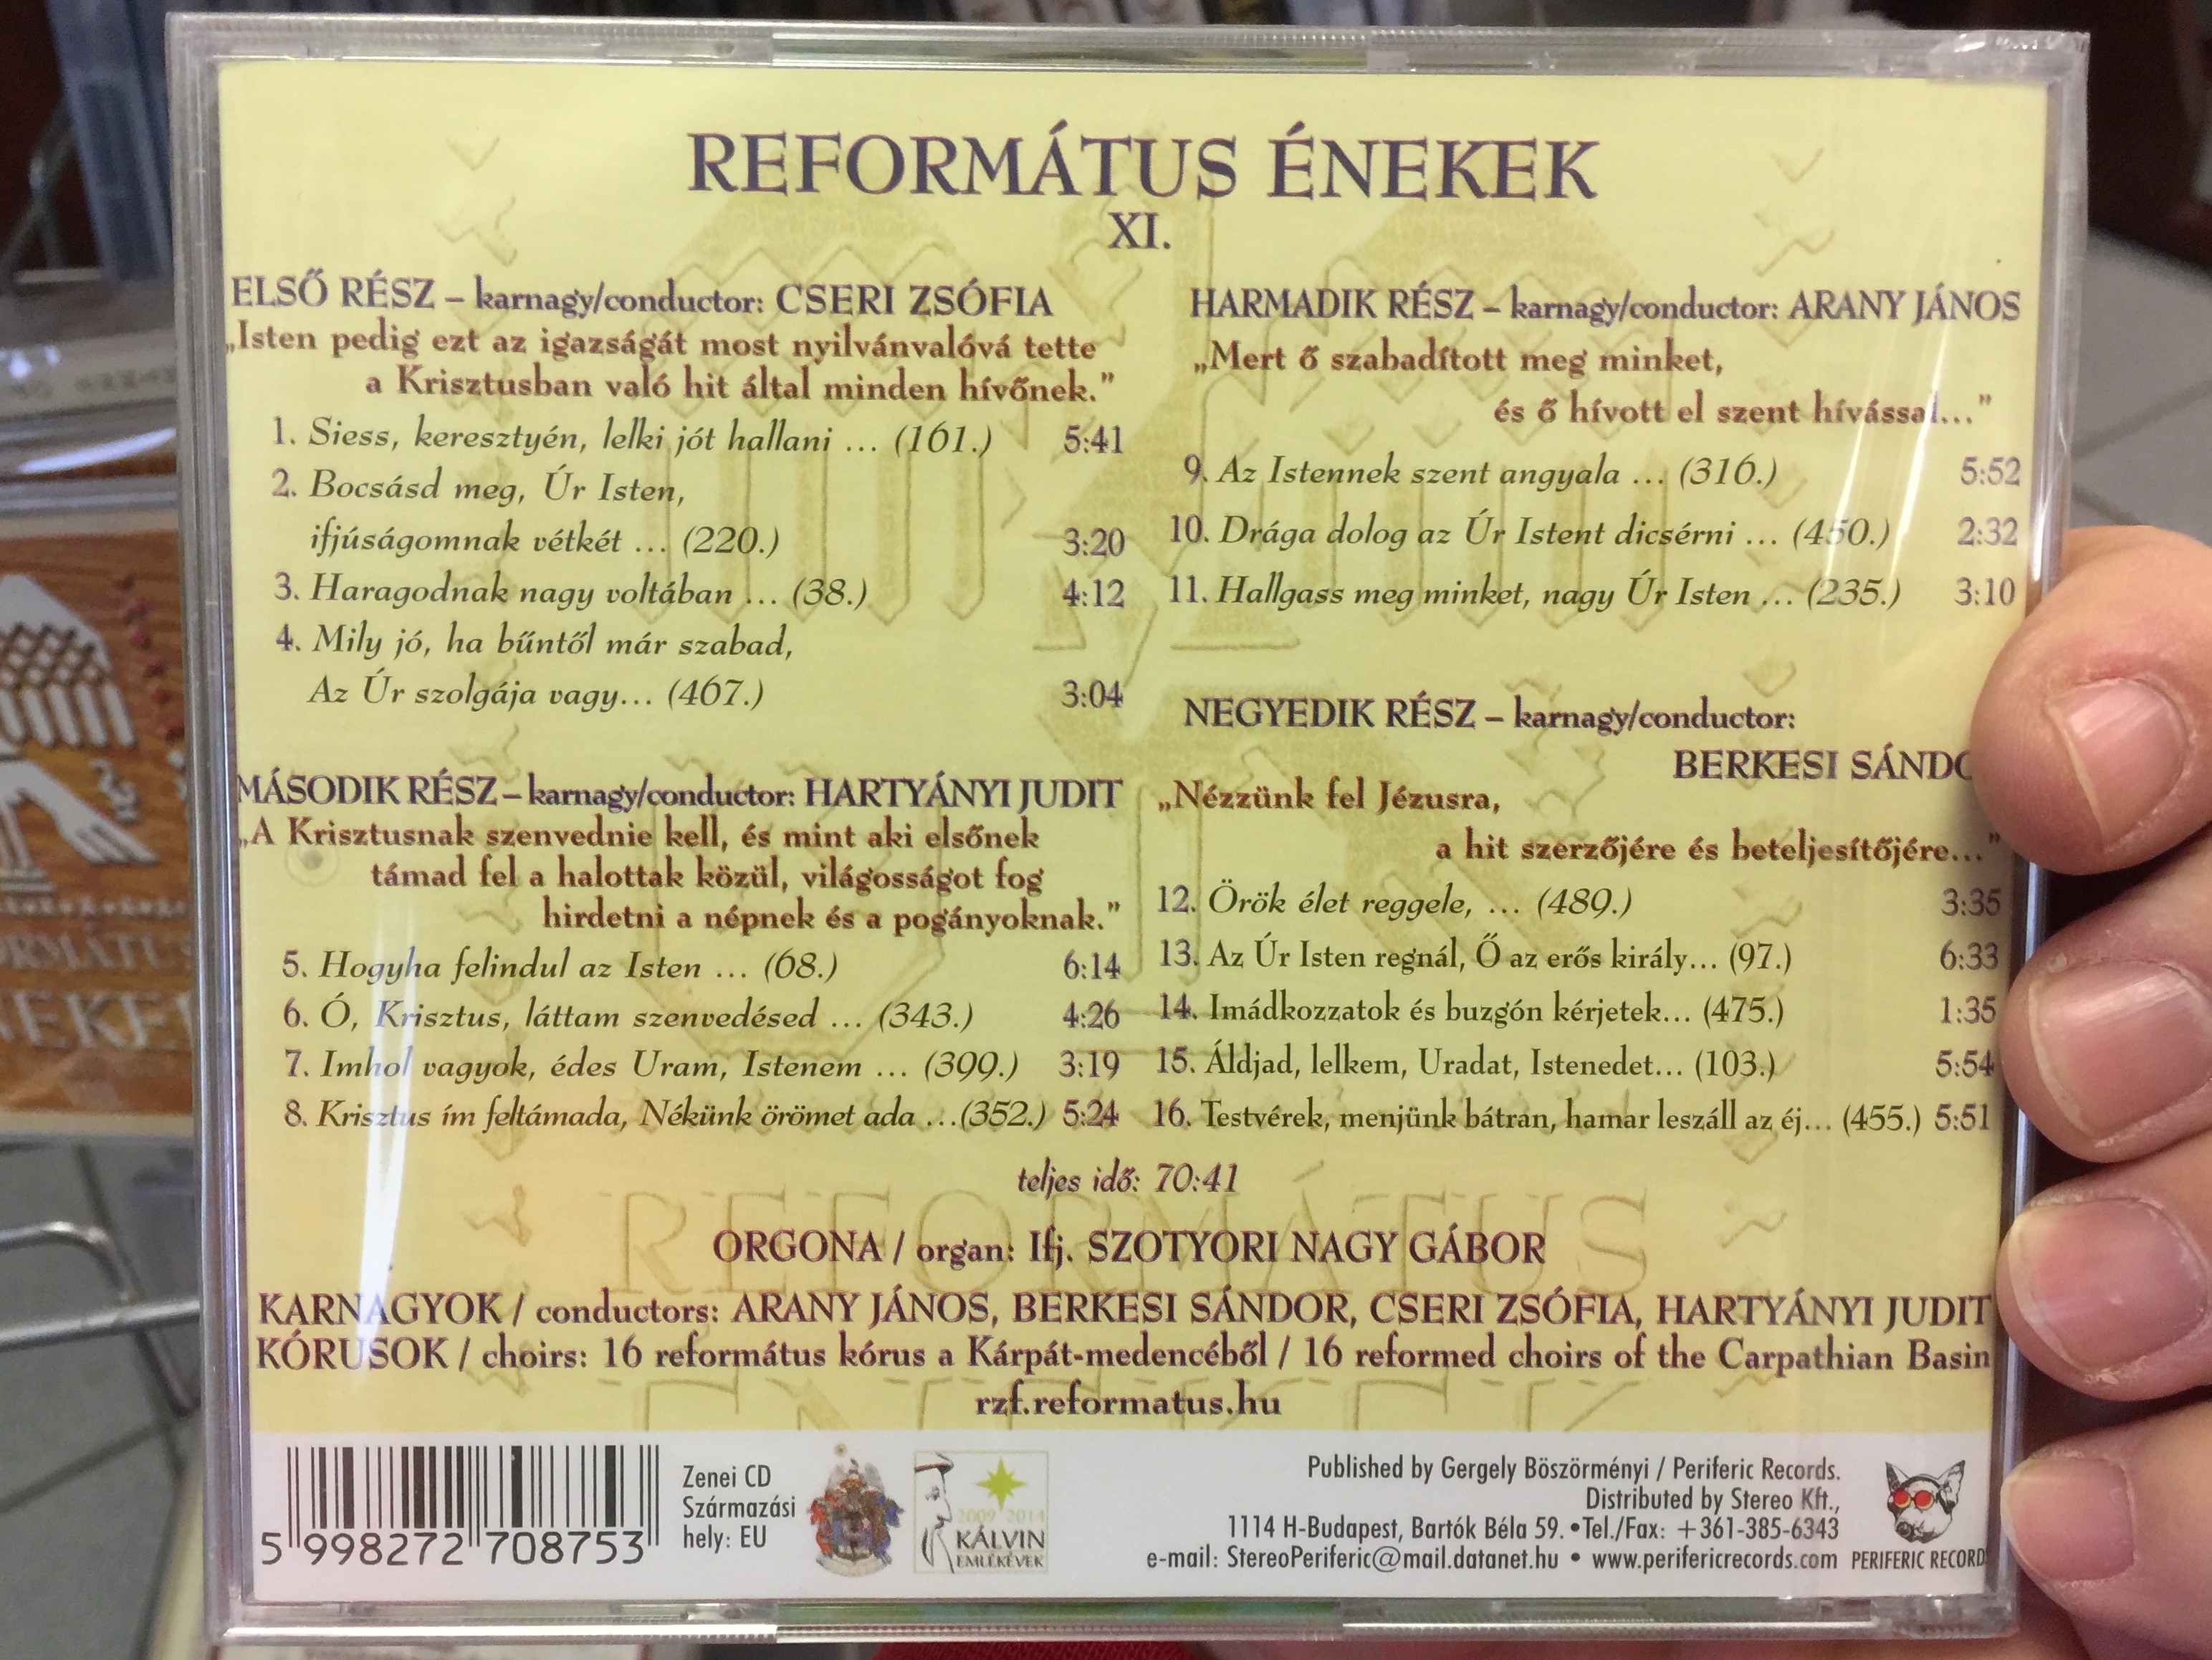 reform-tus-nekek-11.-audio-cd-2012-hymns-of-the-reformed-church-xi.-2.jpg